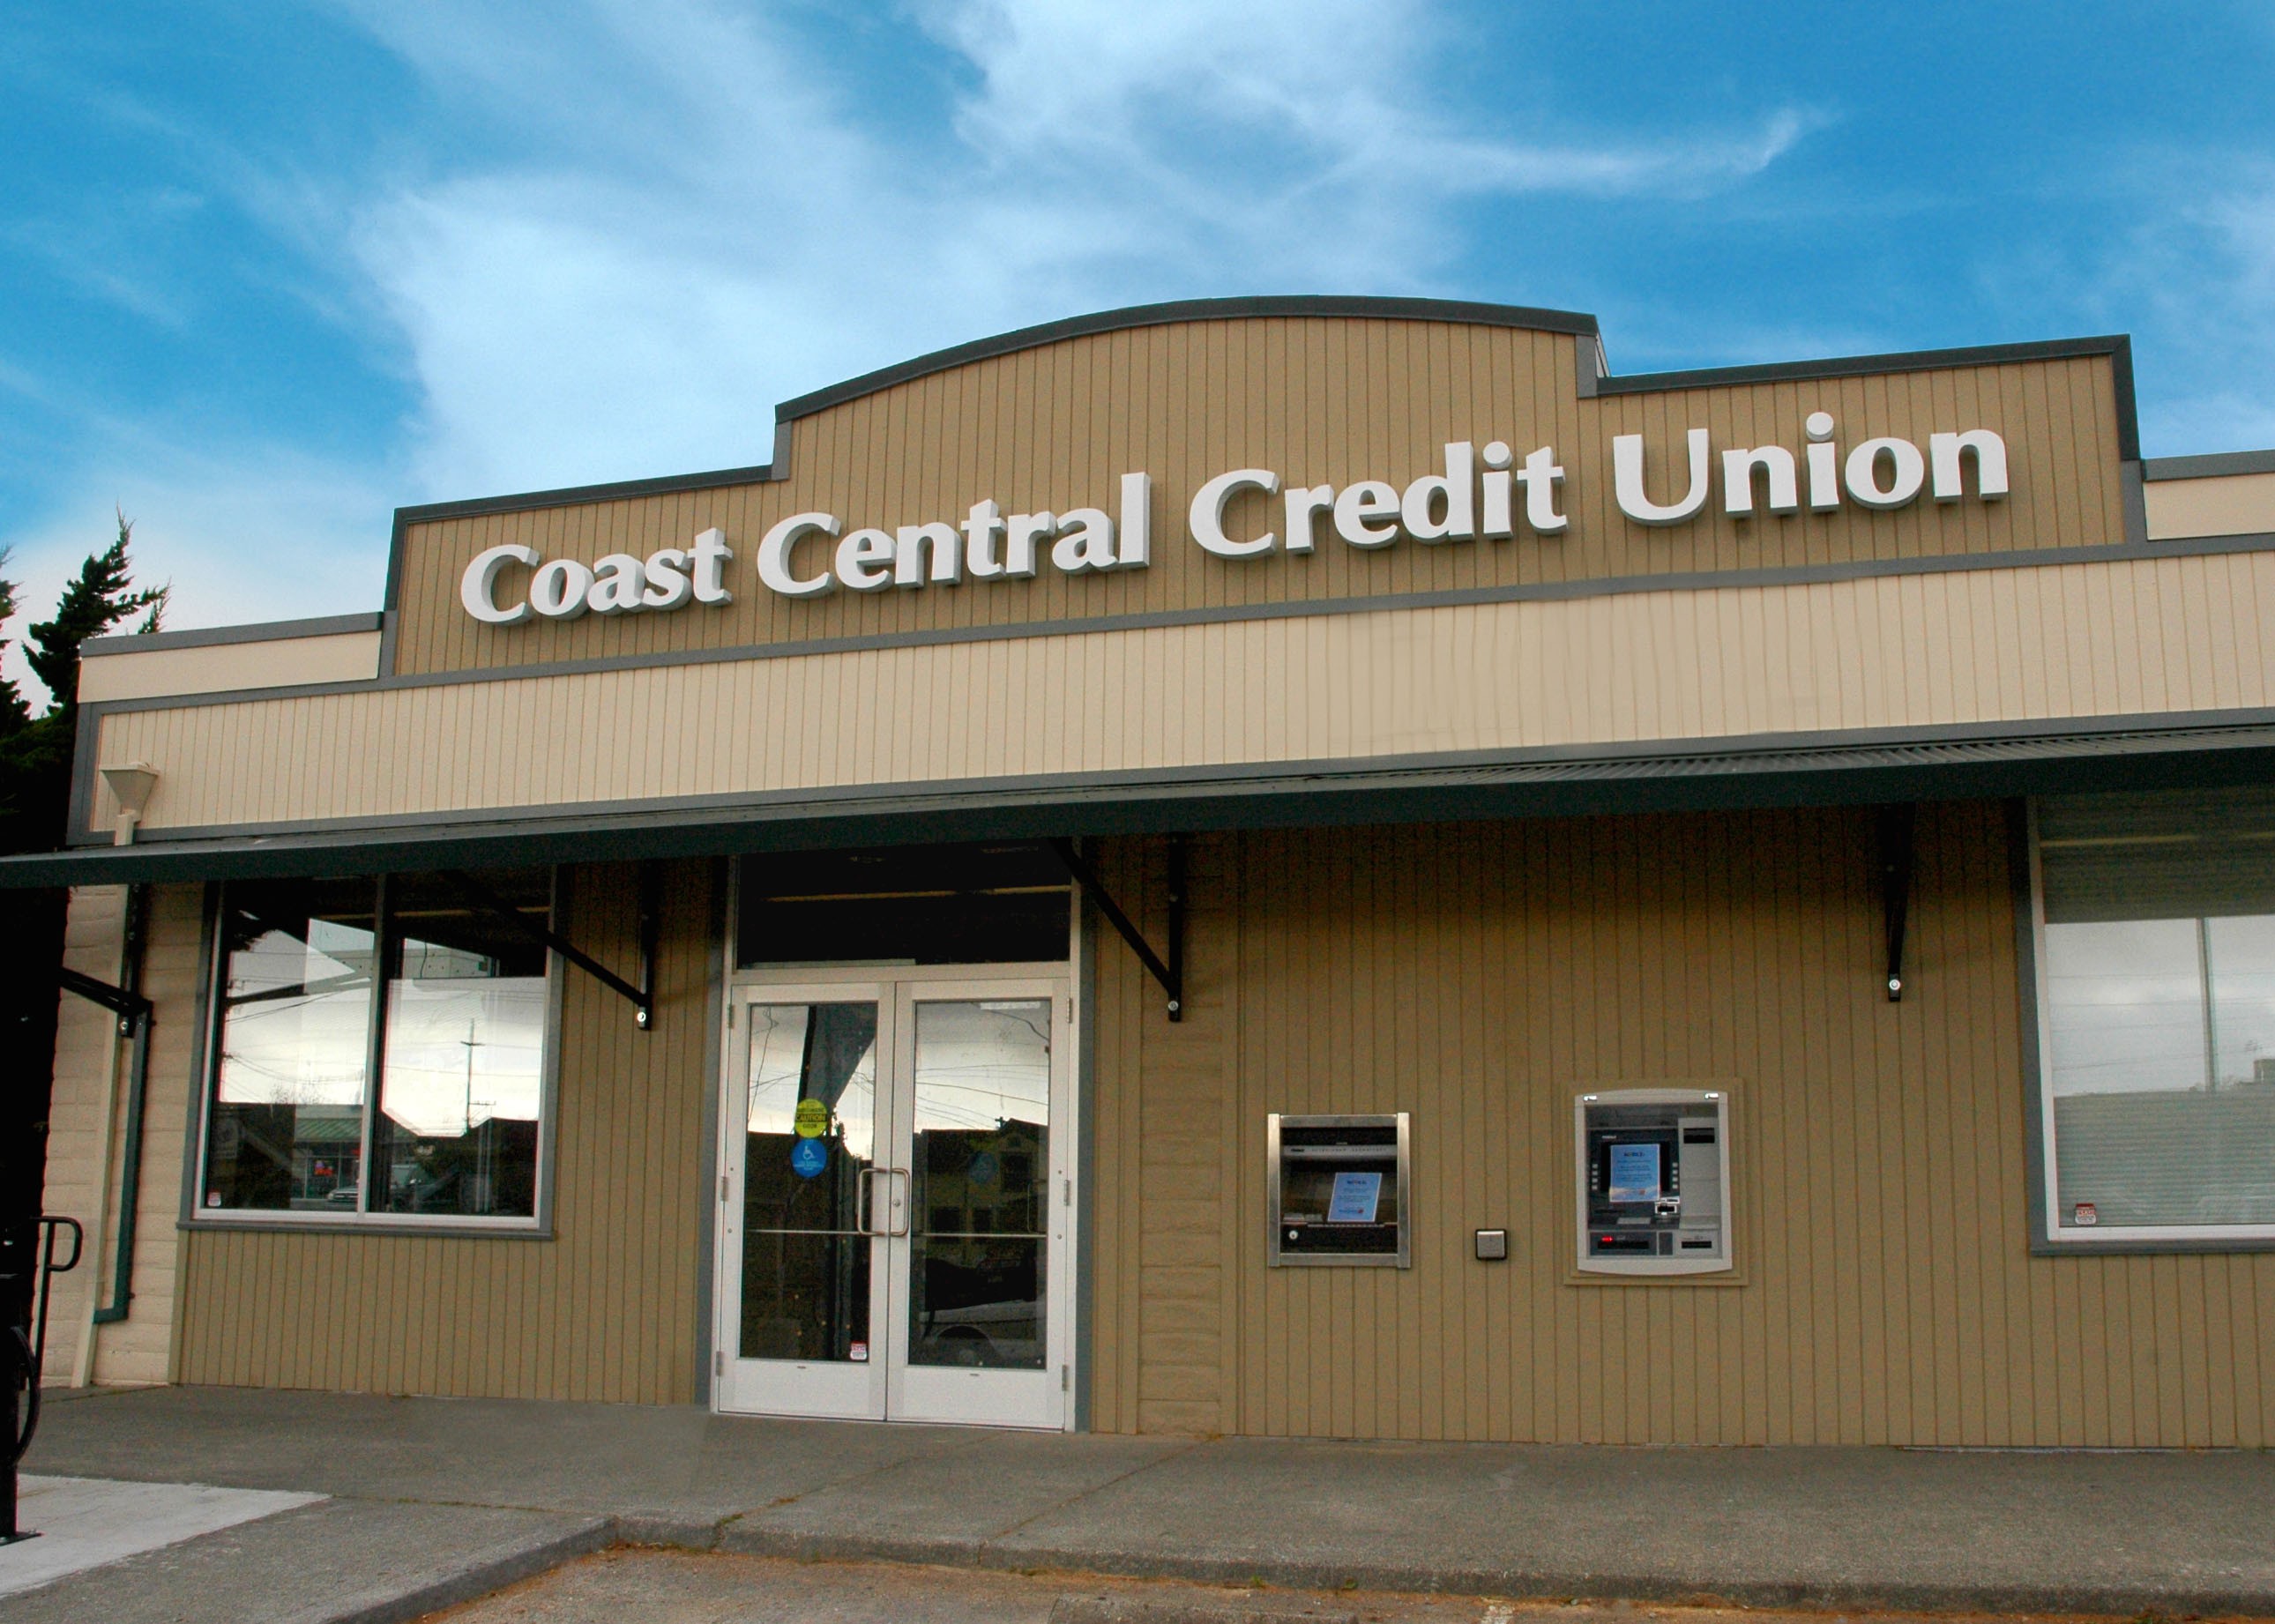 Coast Central Credit Union, Arcata Uniontown branch - PHOTO COURTESY OF COAST CENTRAL CREDIT UNION